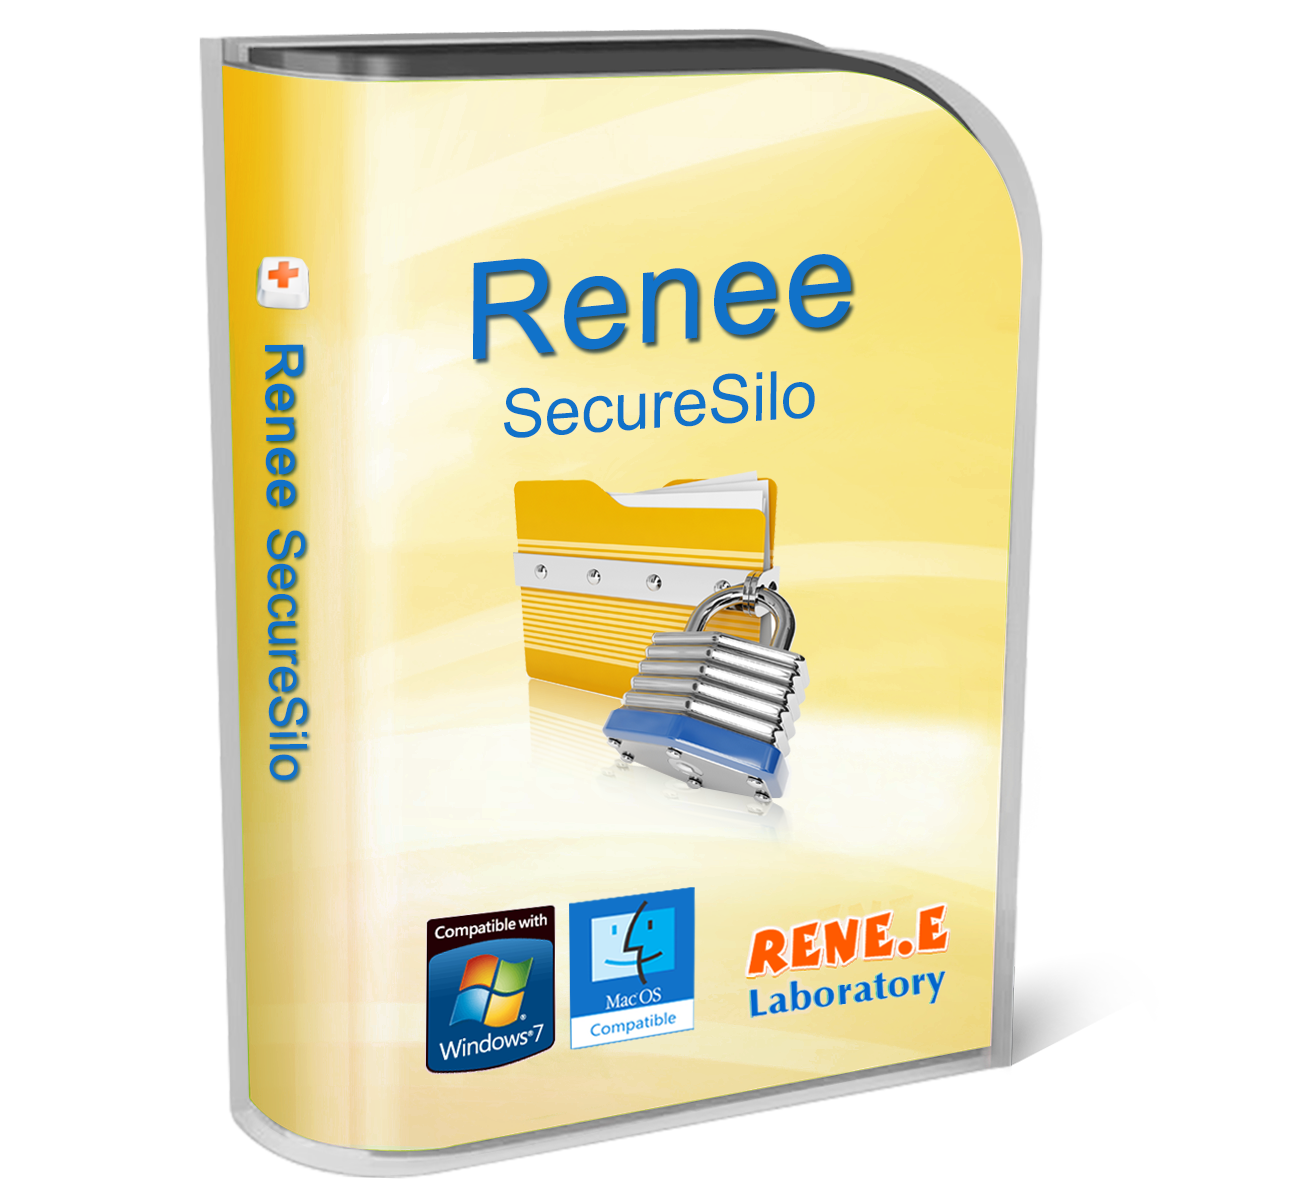 Renee SecureSilo